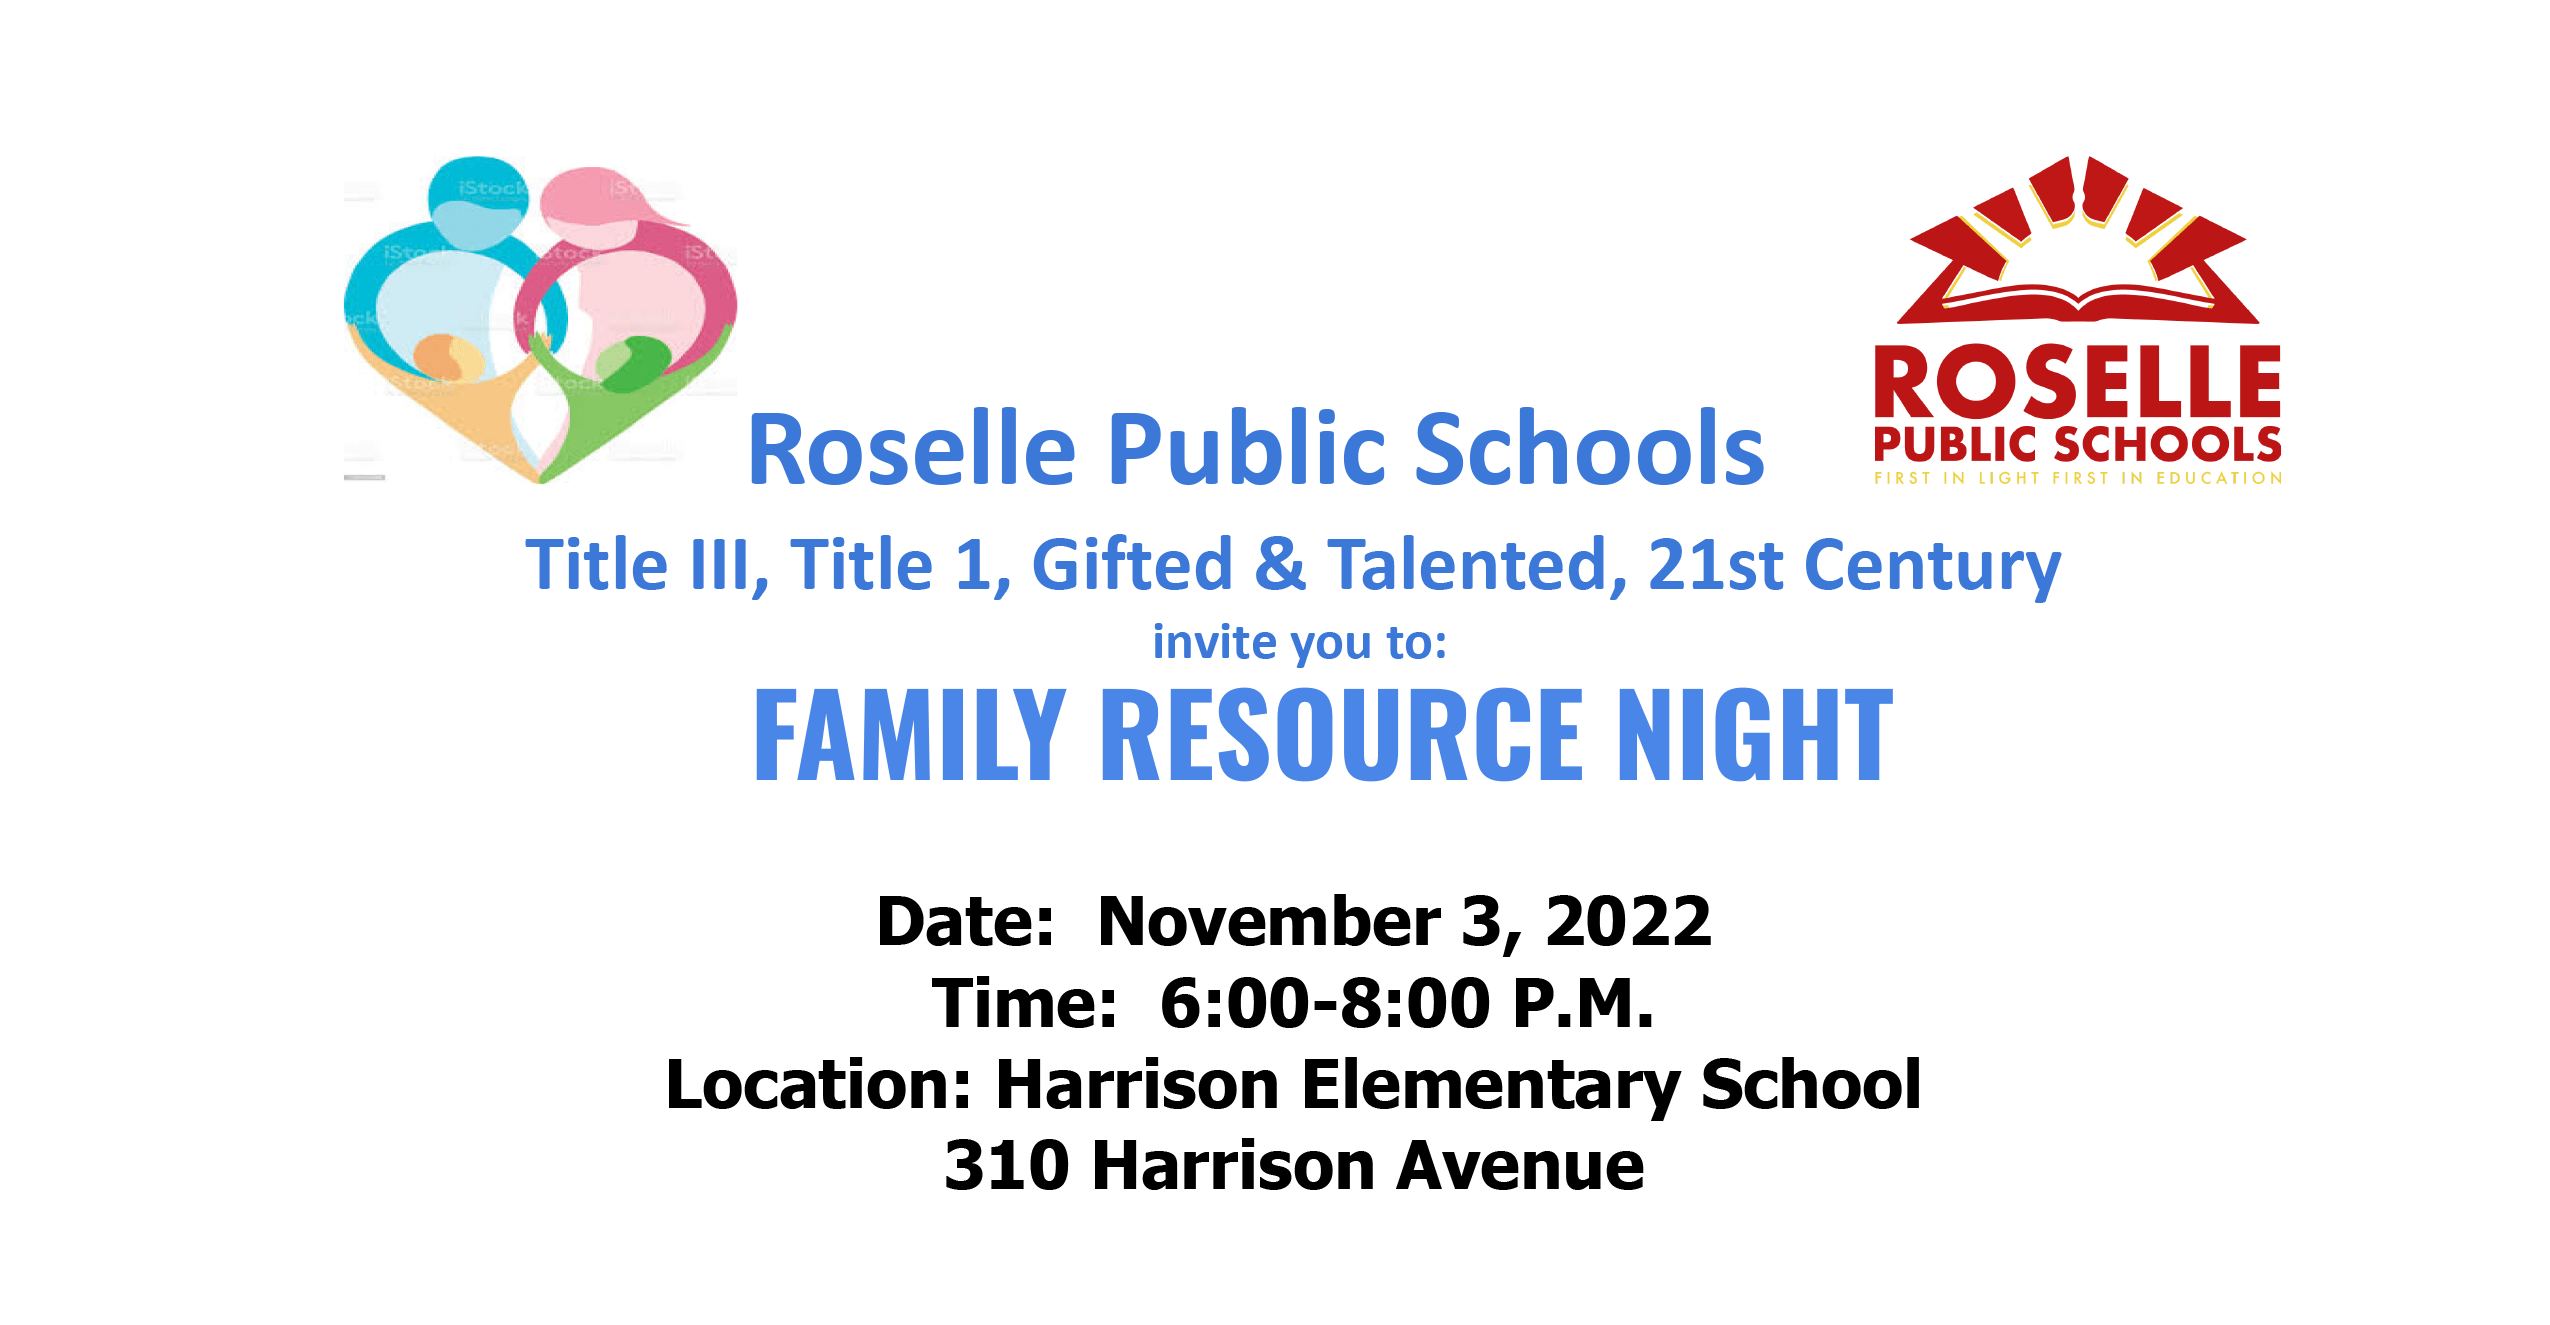 Family Resource Night at Harrison Elementary School